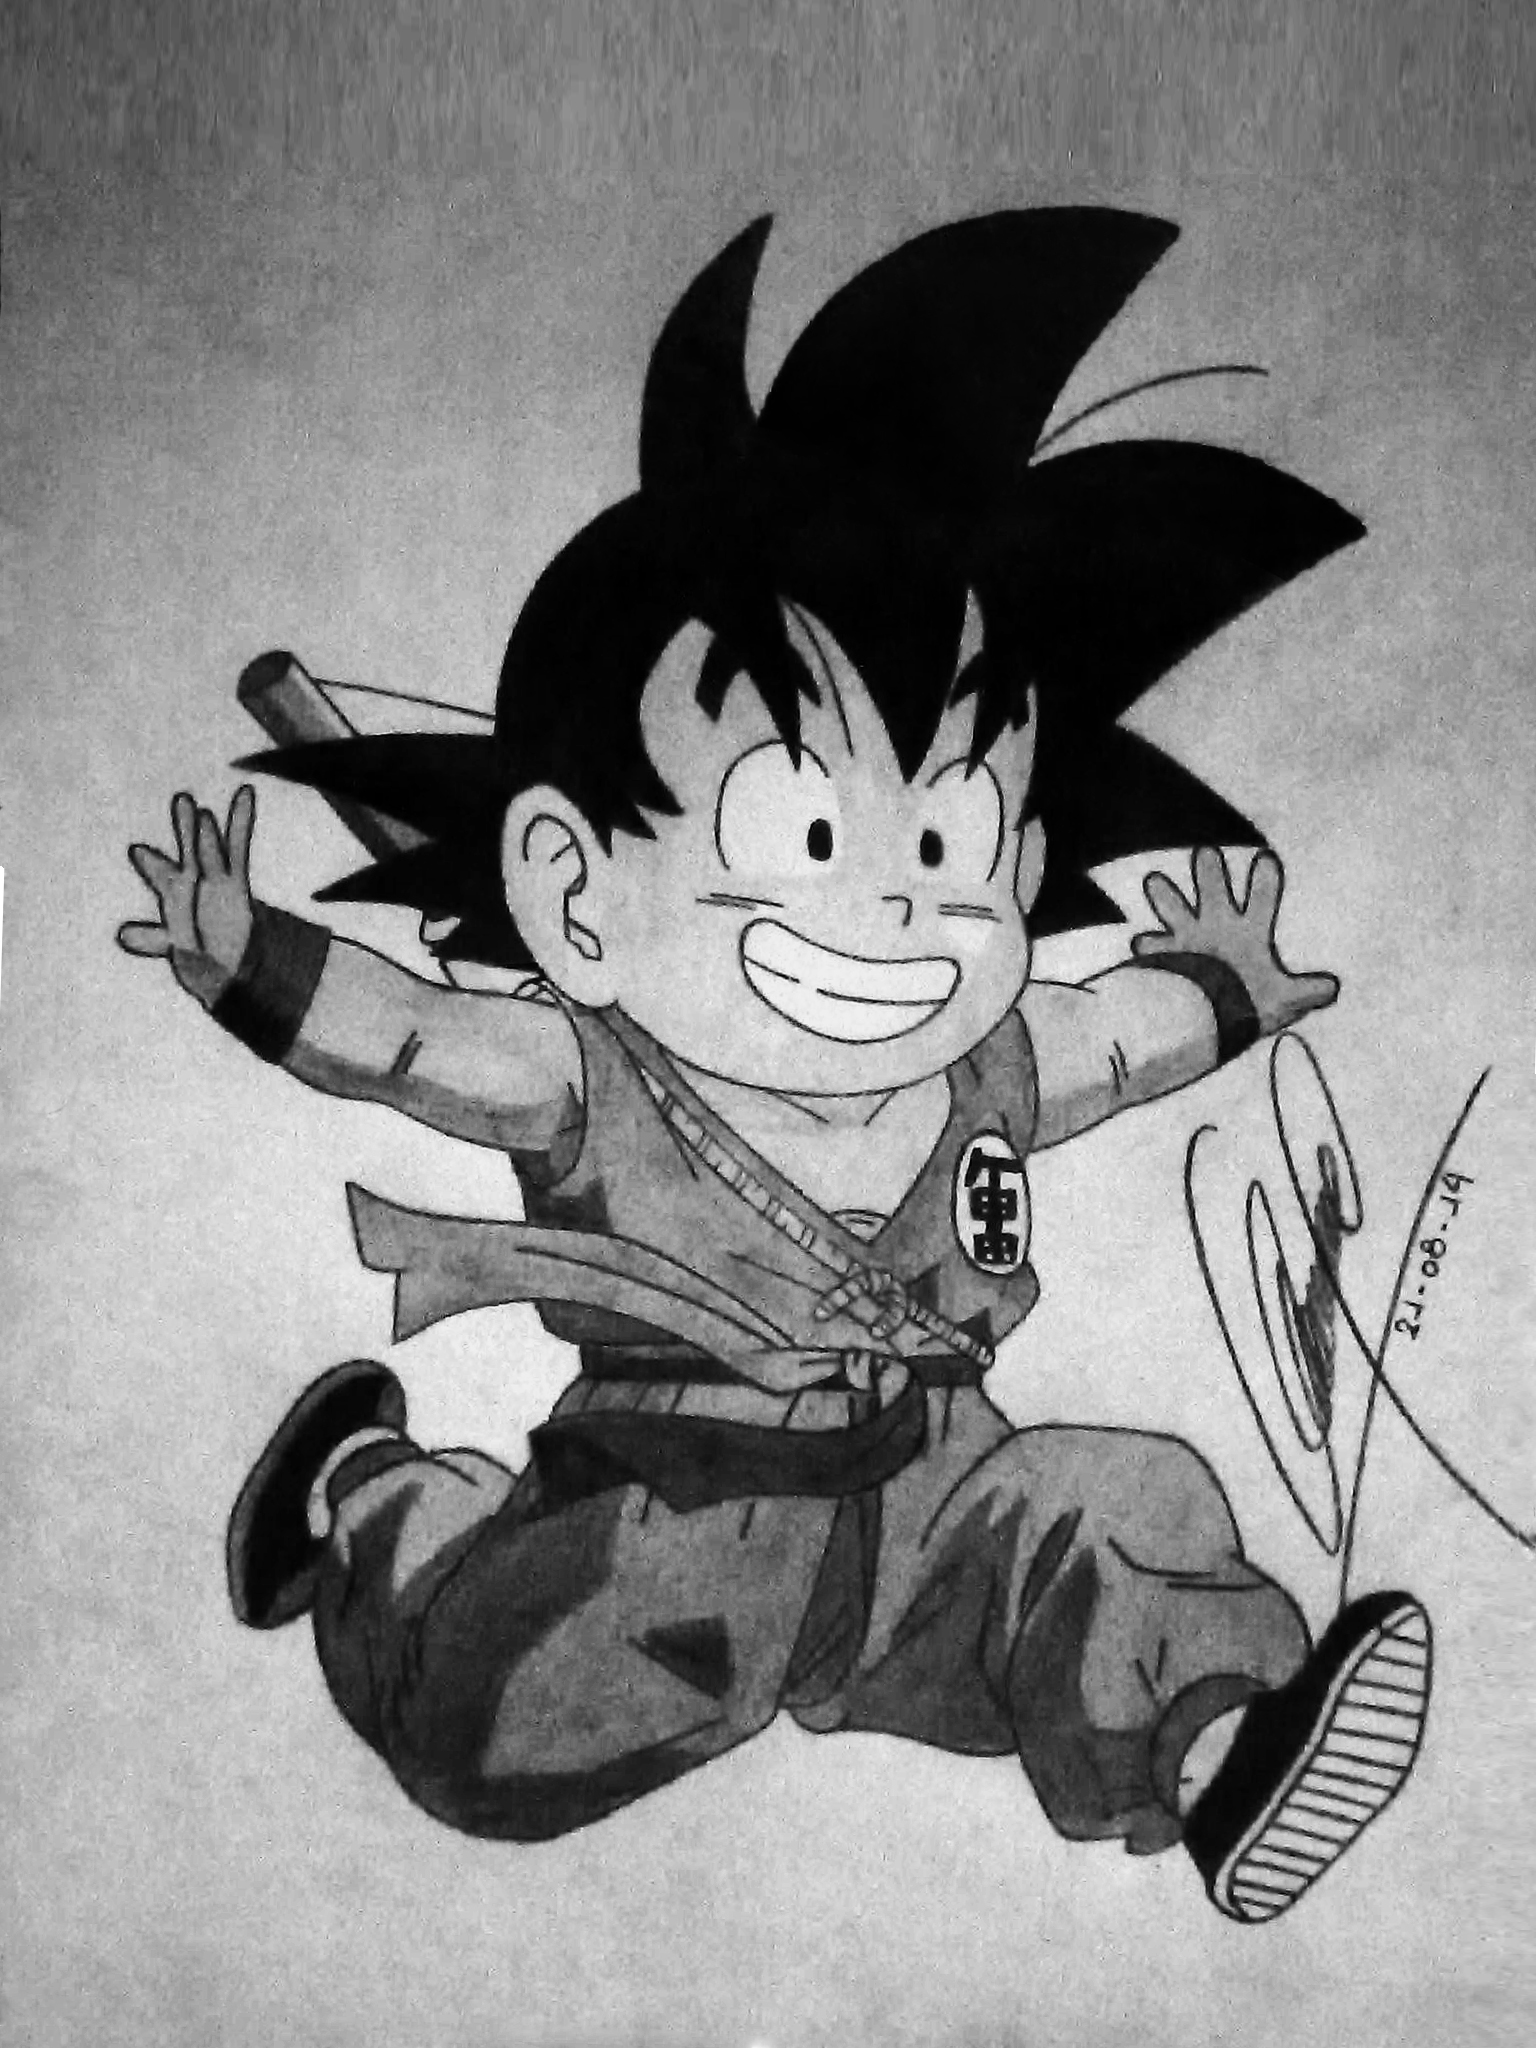 Goku Chiquito! by pegasusmcr on DeviantArt